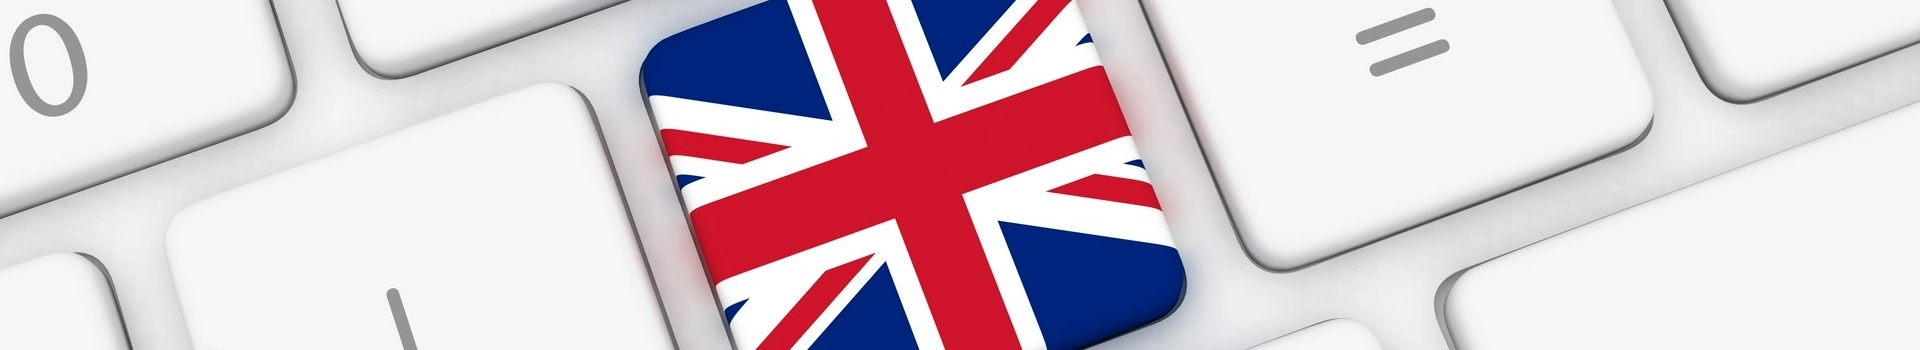 Flaga Anglii na klawiaturze